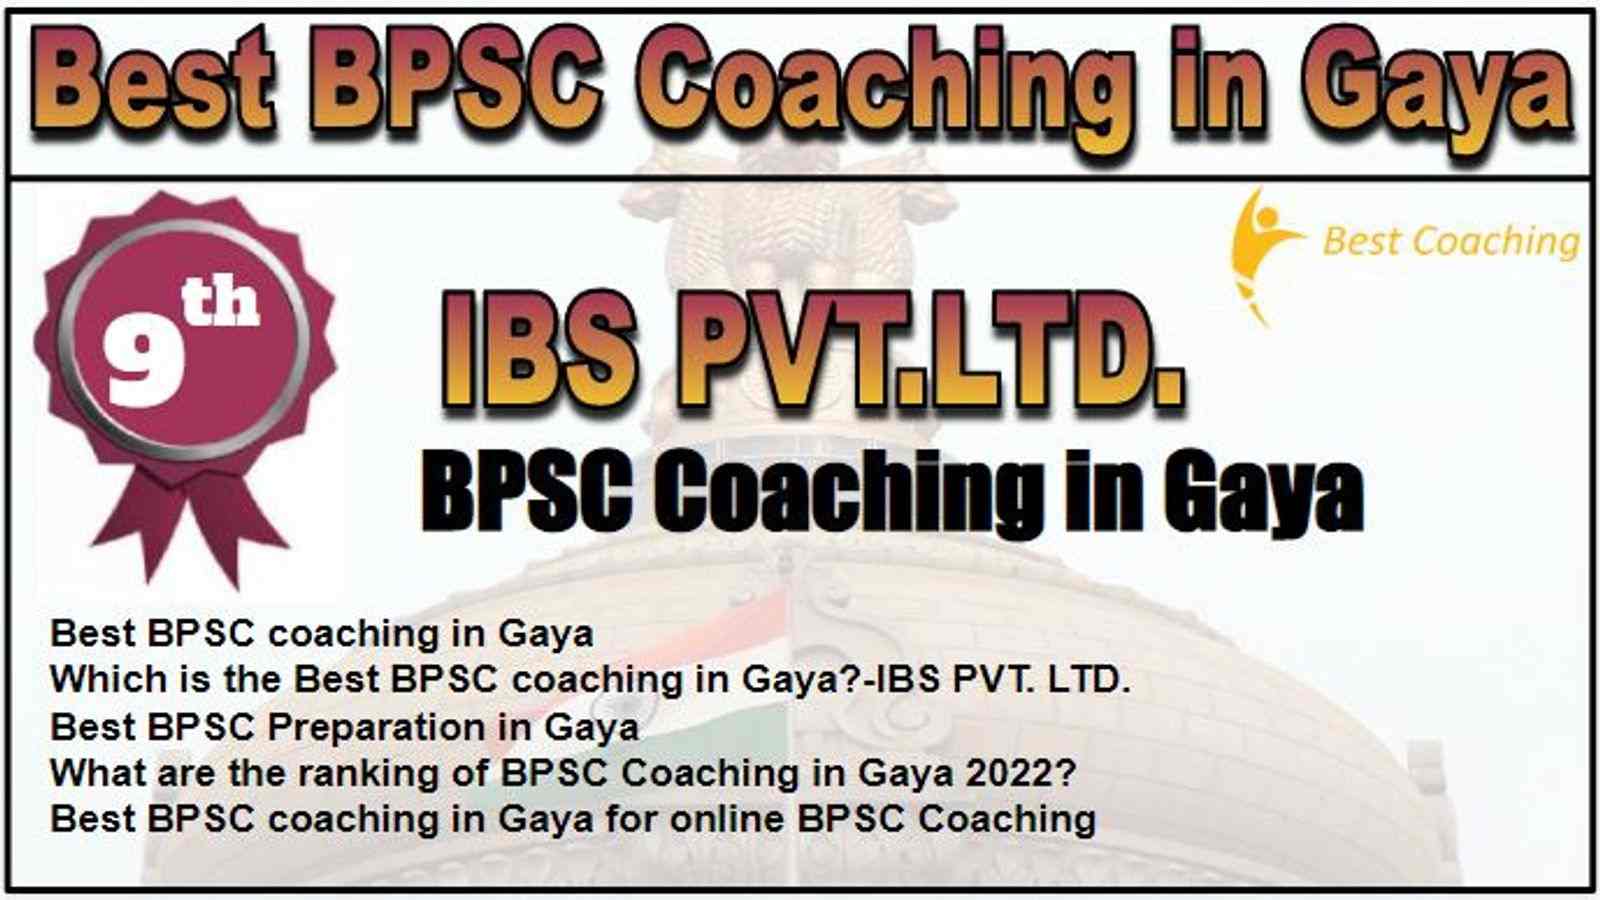 Rank 9 Best BPSC Coaching in Gaya